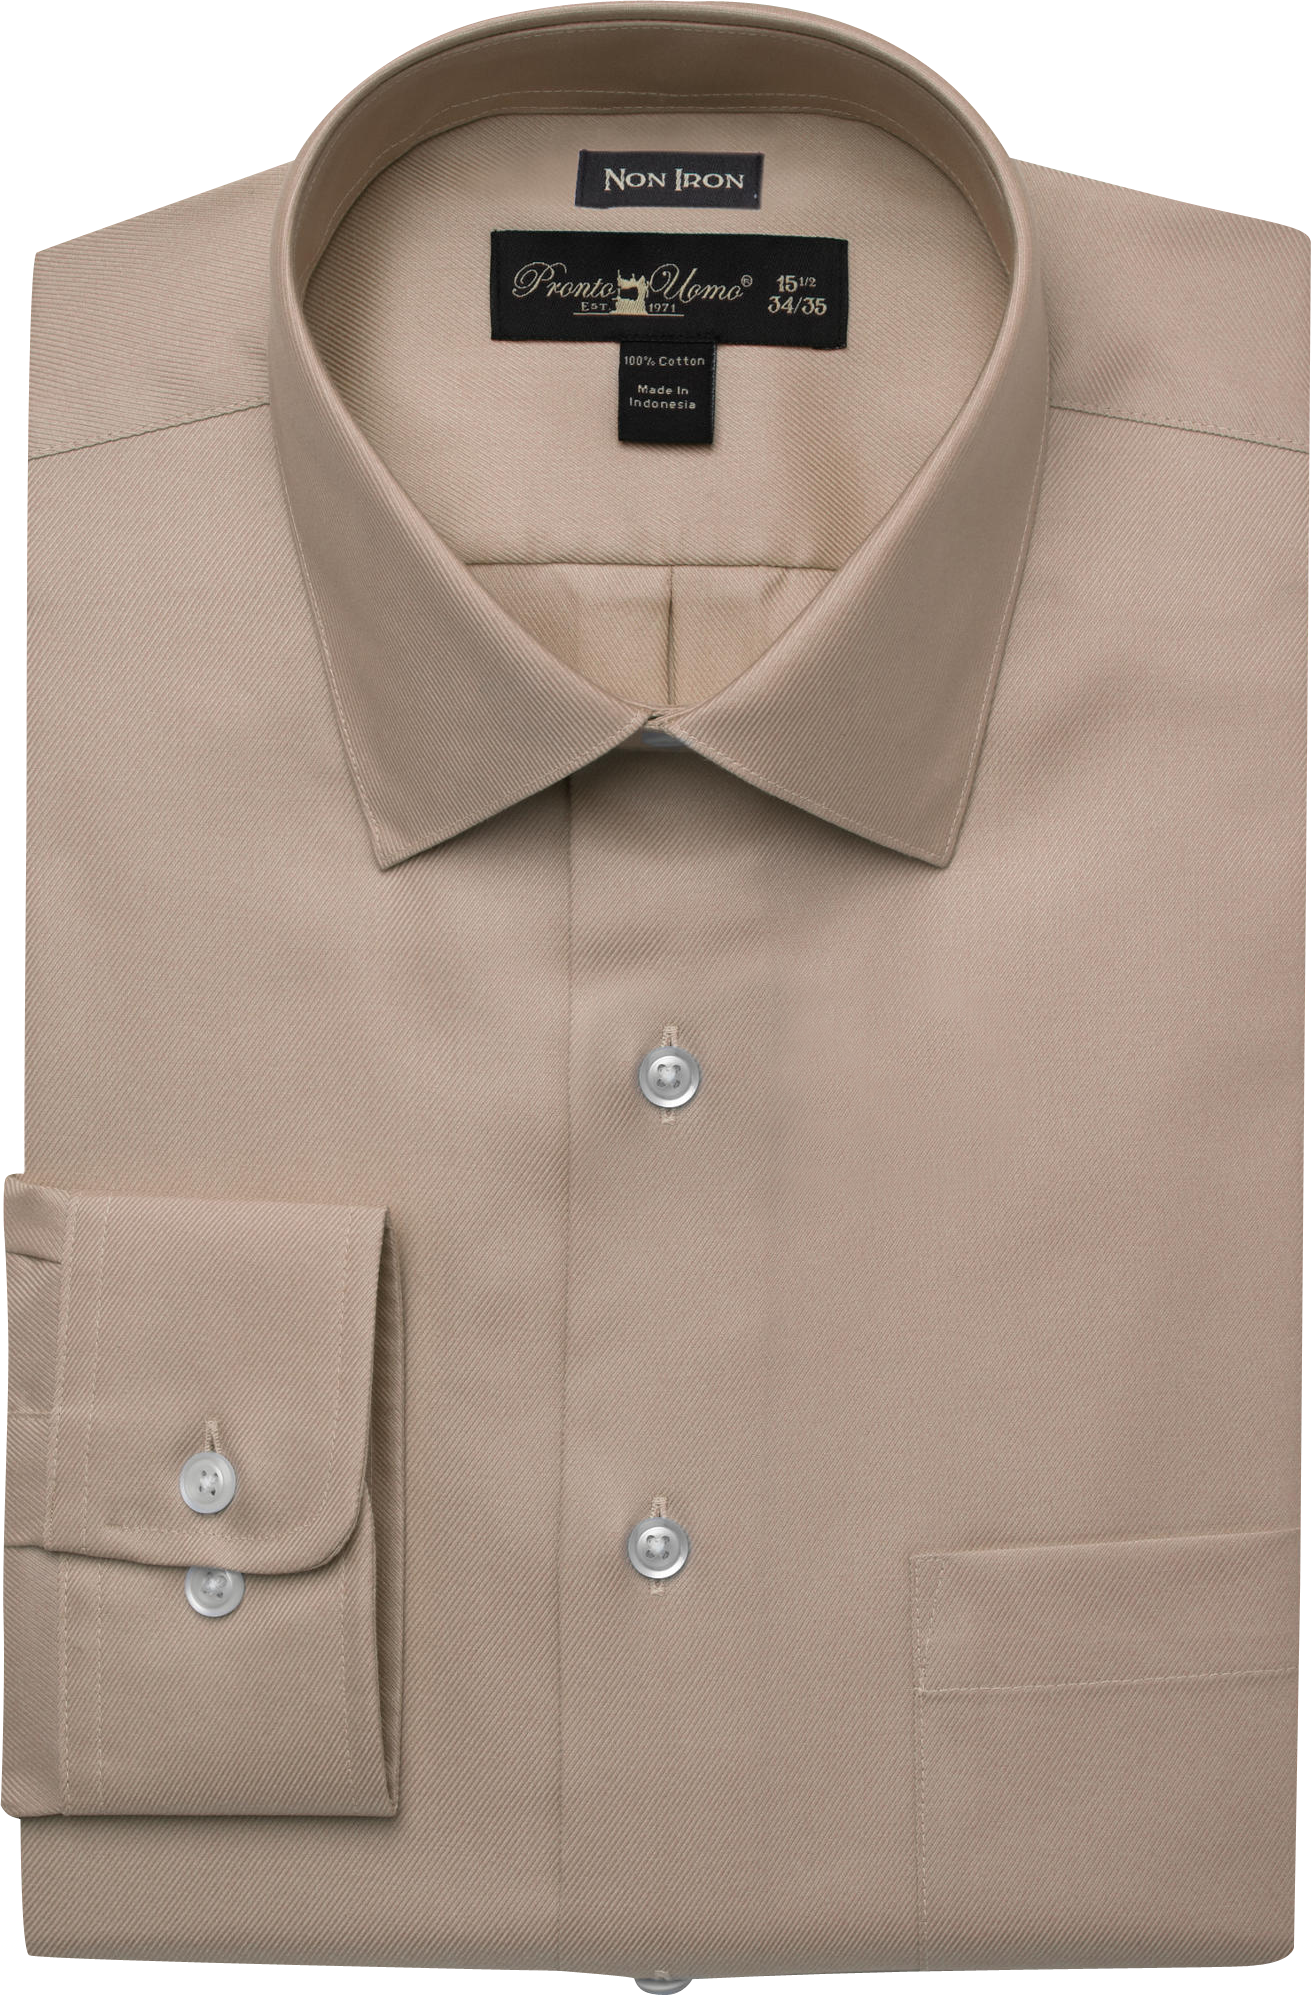 Pronto Uomo Dress Shirt | Men's Wearhouse